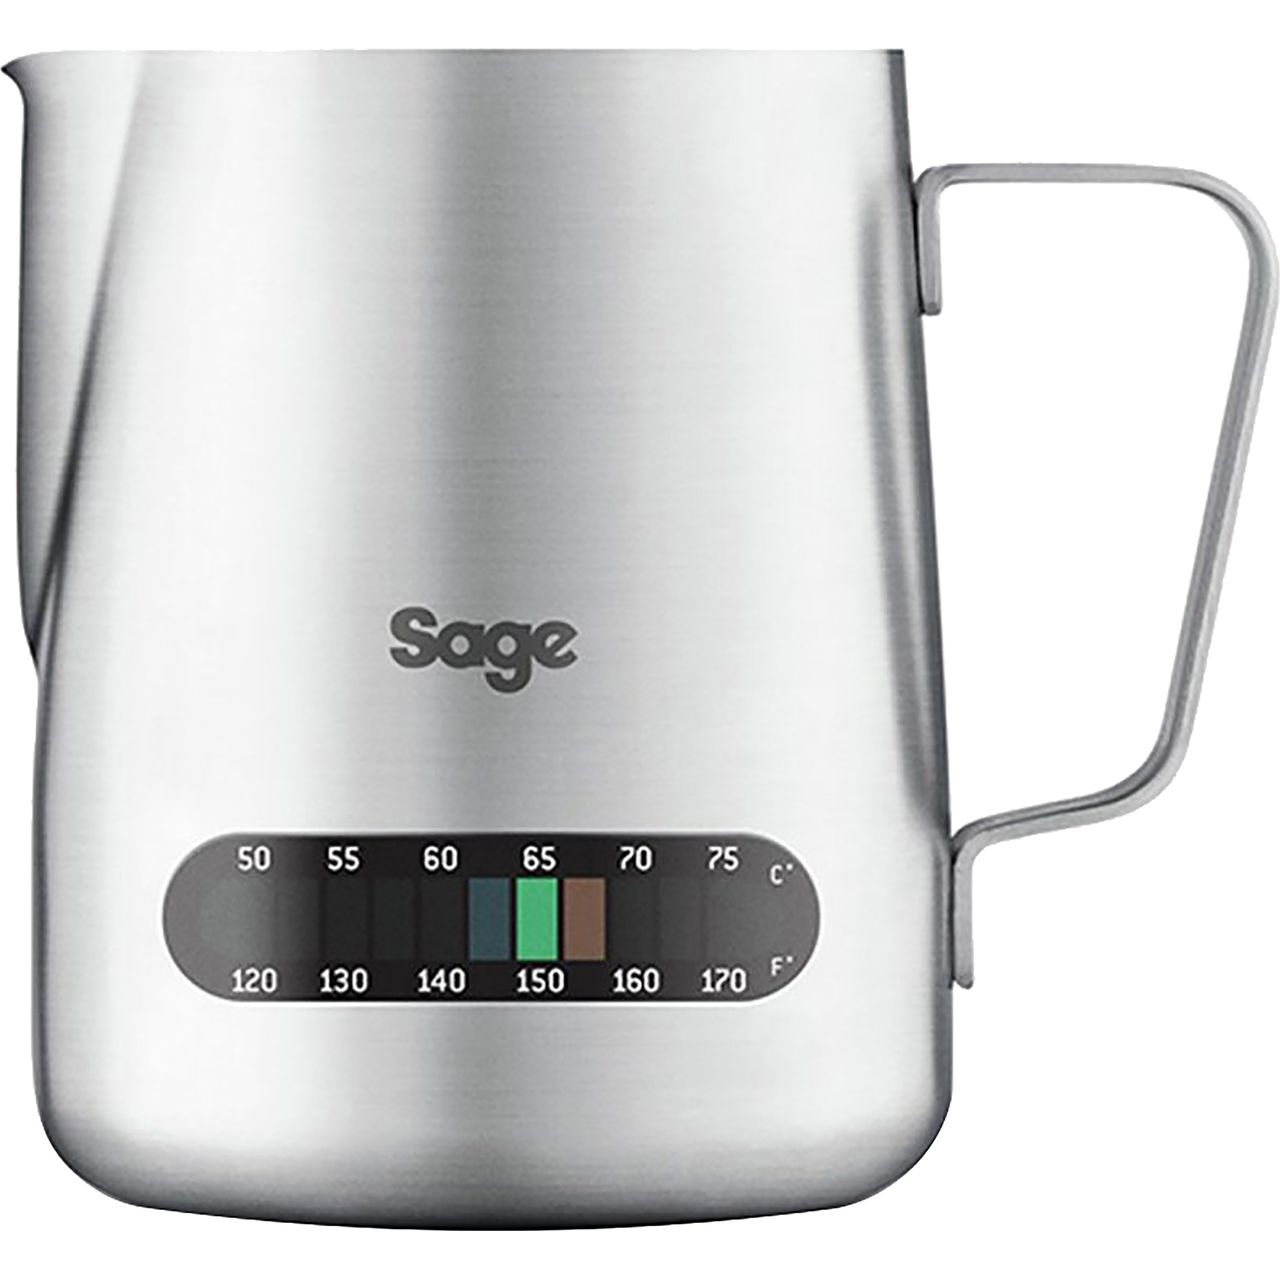 Sage BES003UK Milk Jug Review